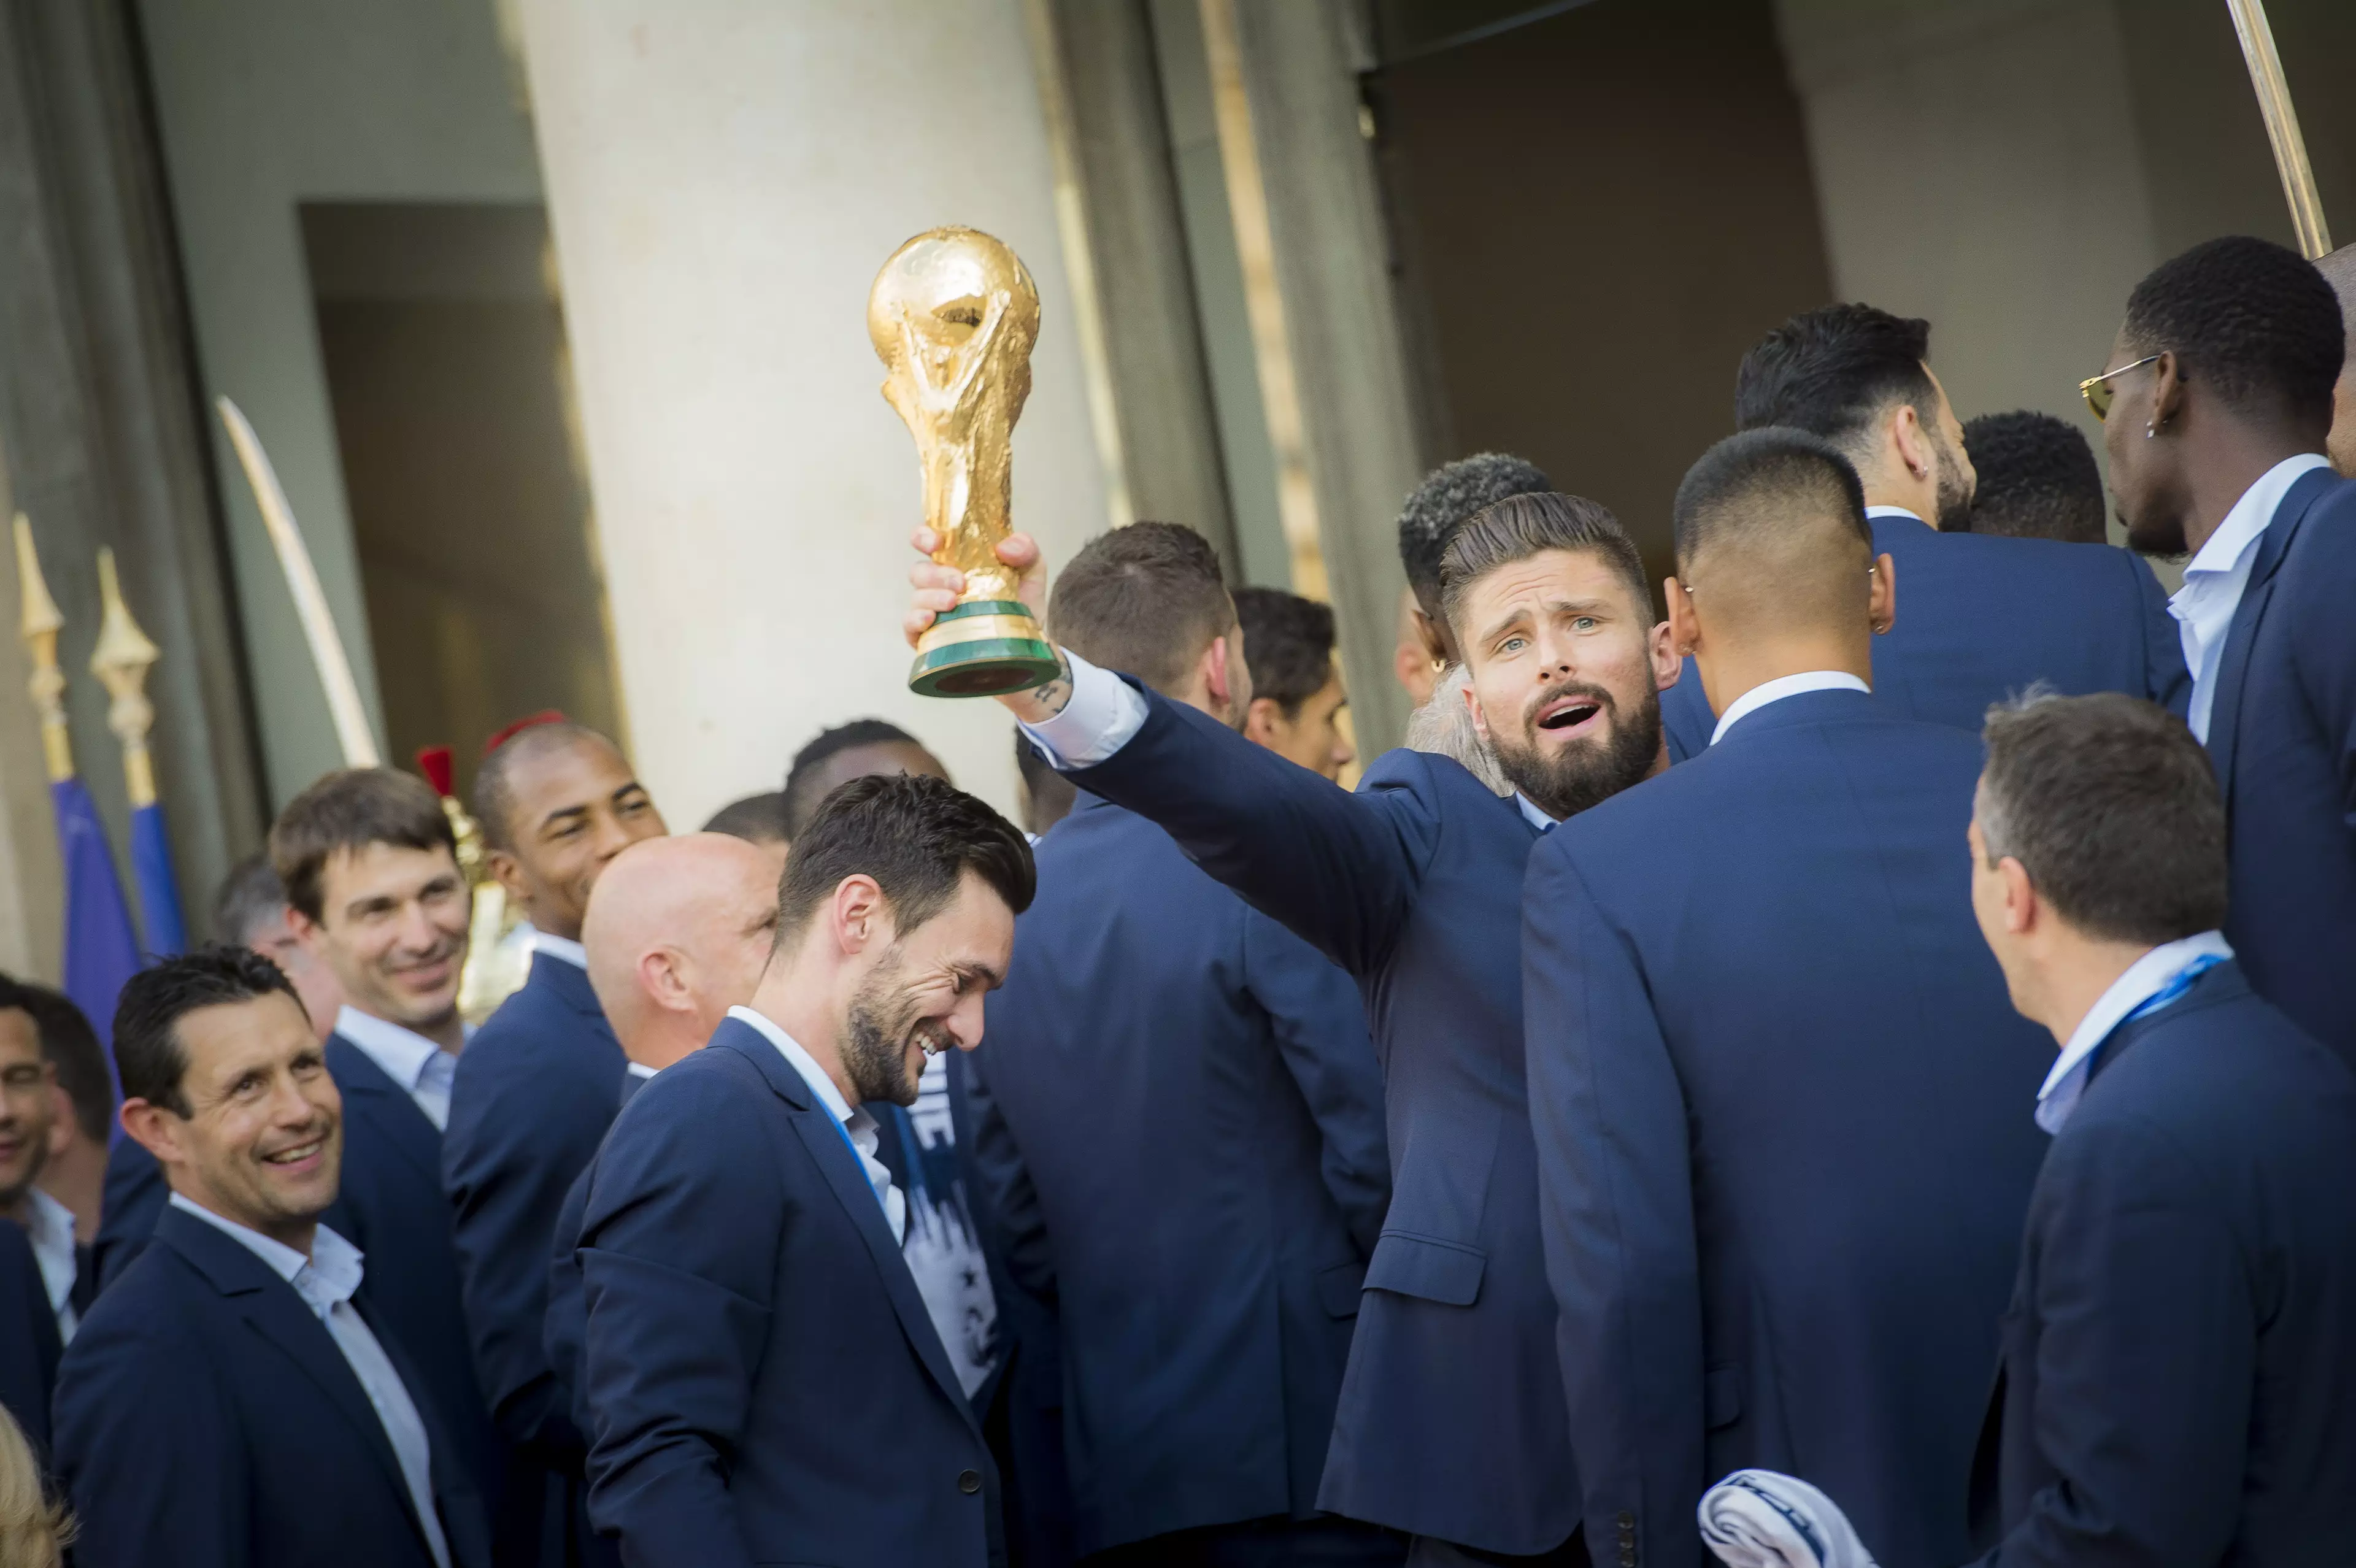 Giroud raises the World Cup. Image: PA